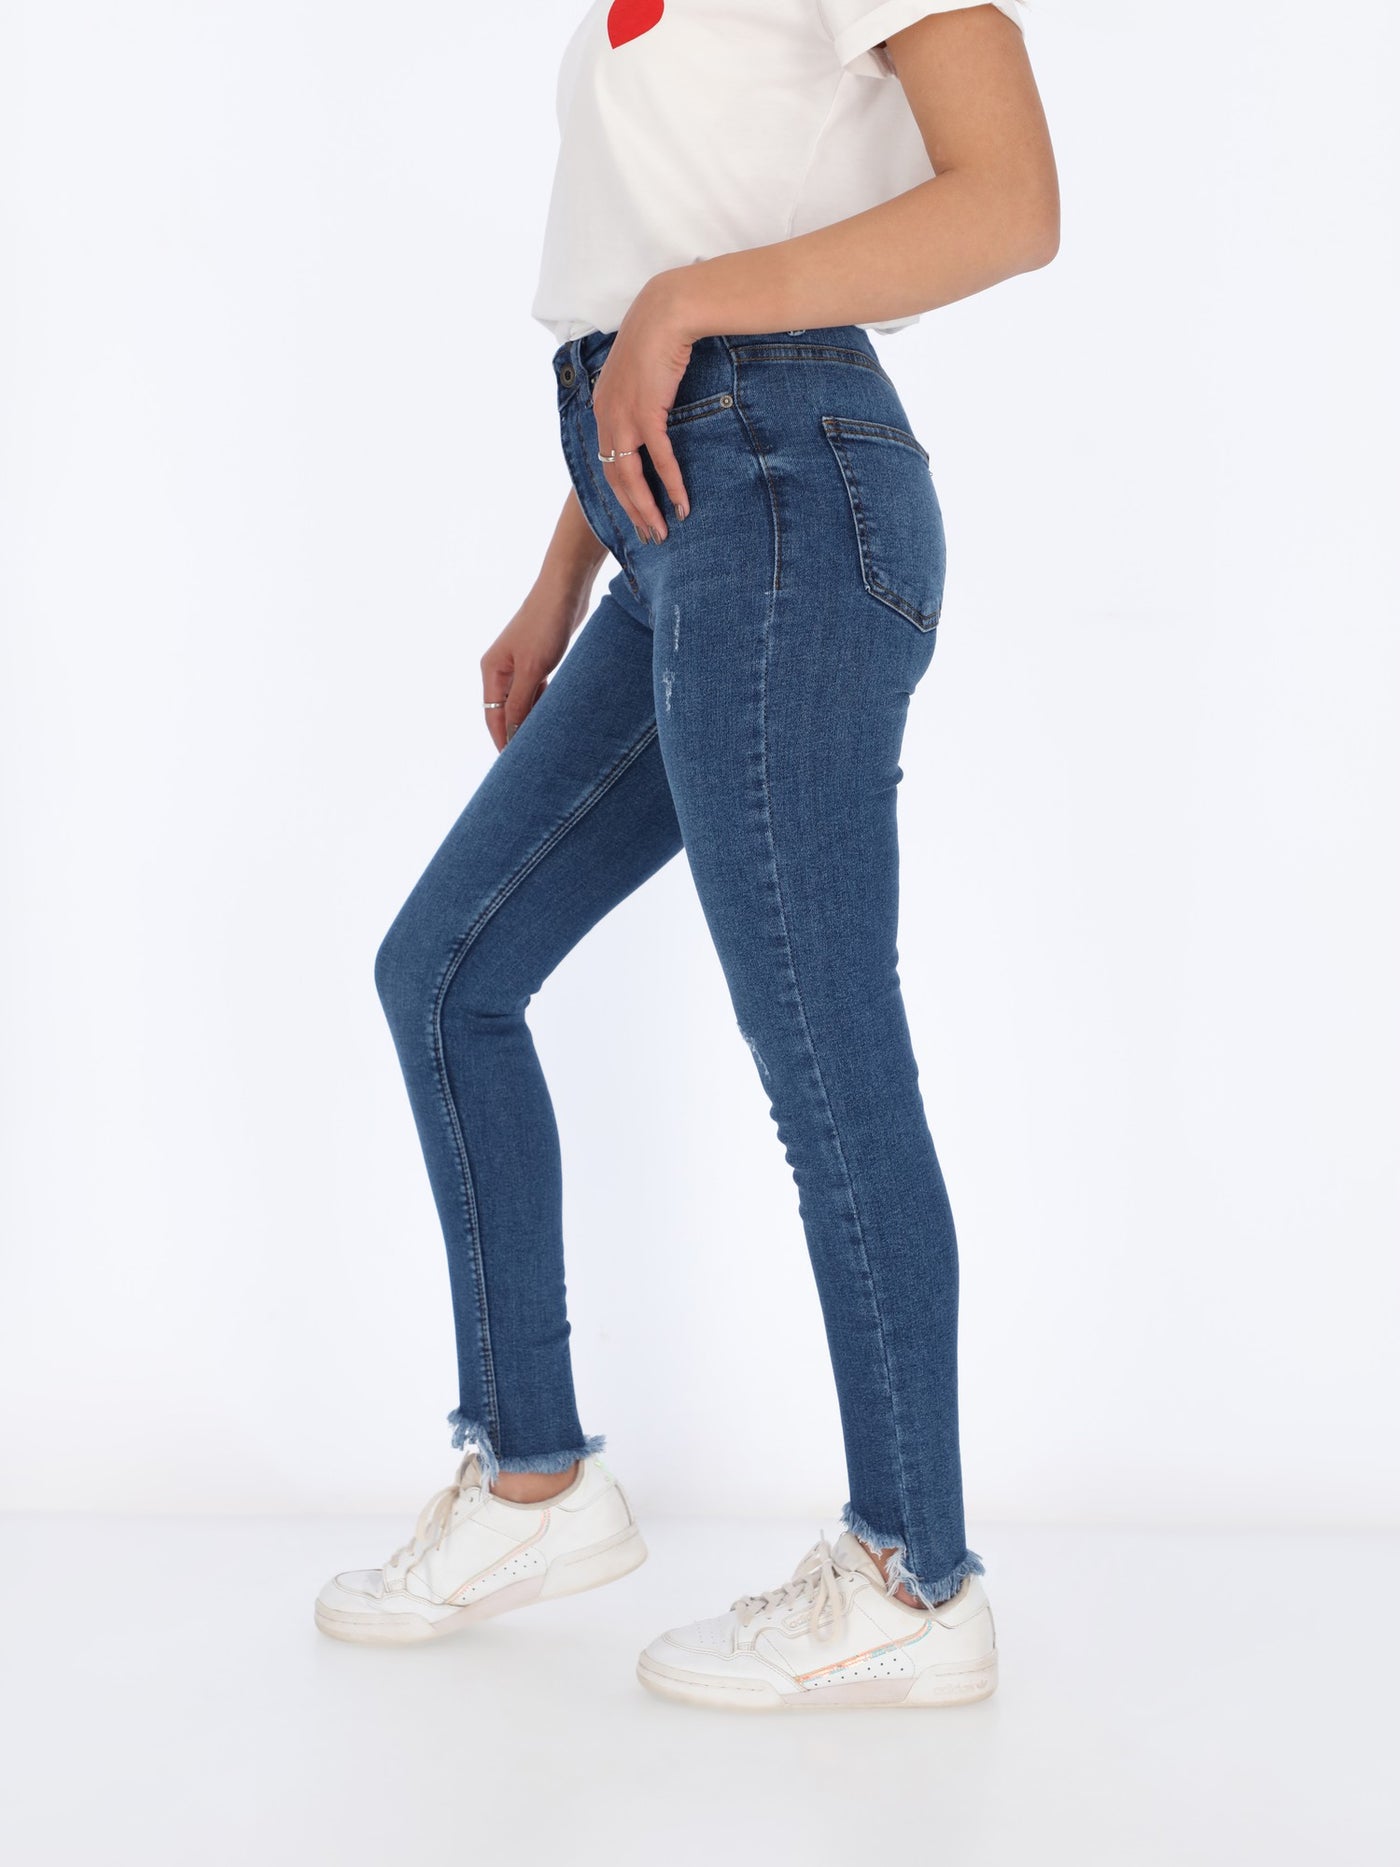 OR Women's Raw Hem Skinny Jeans